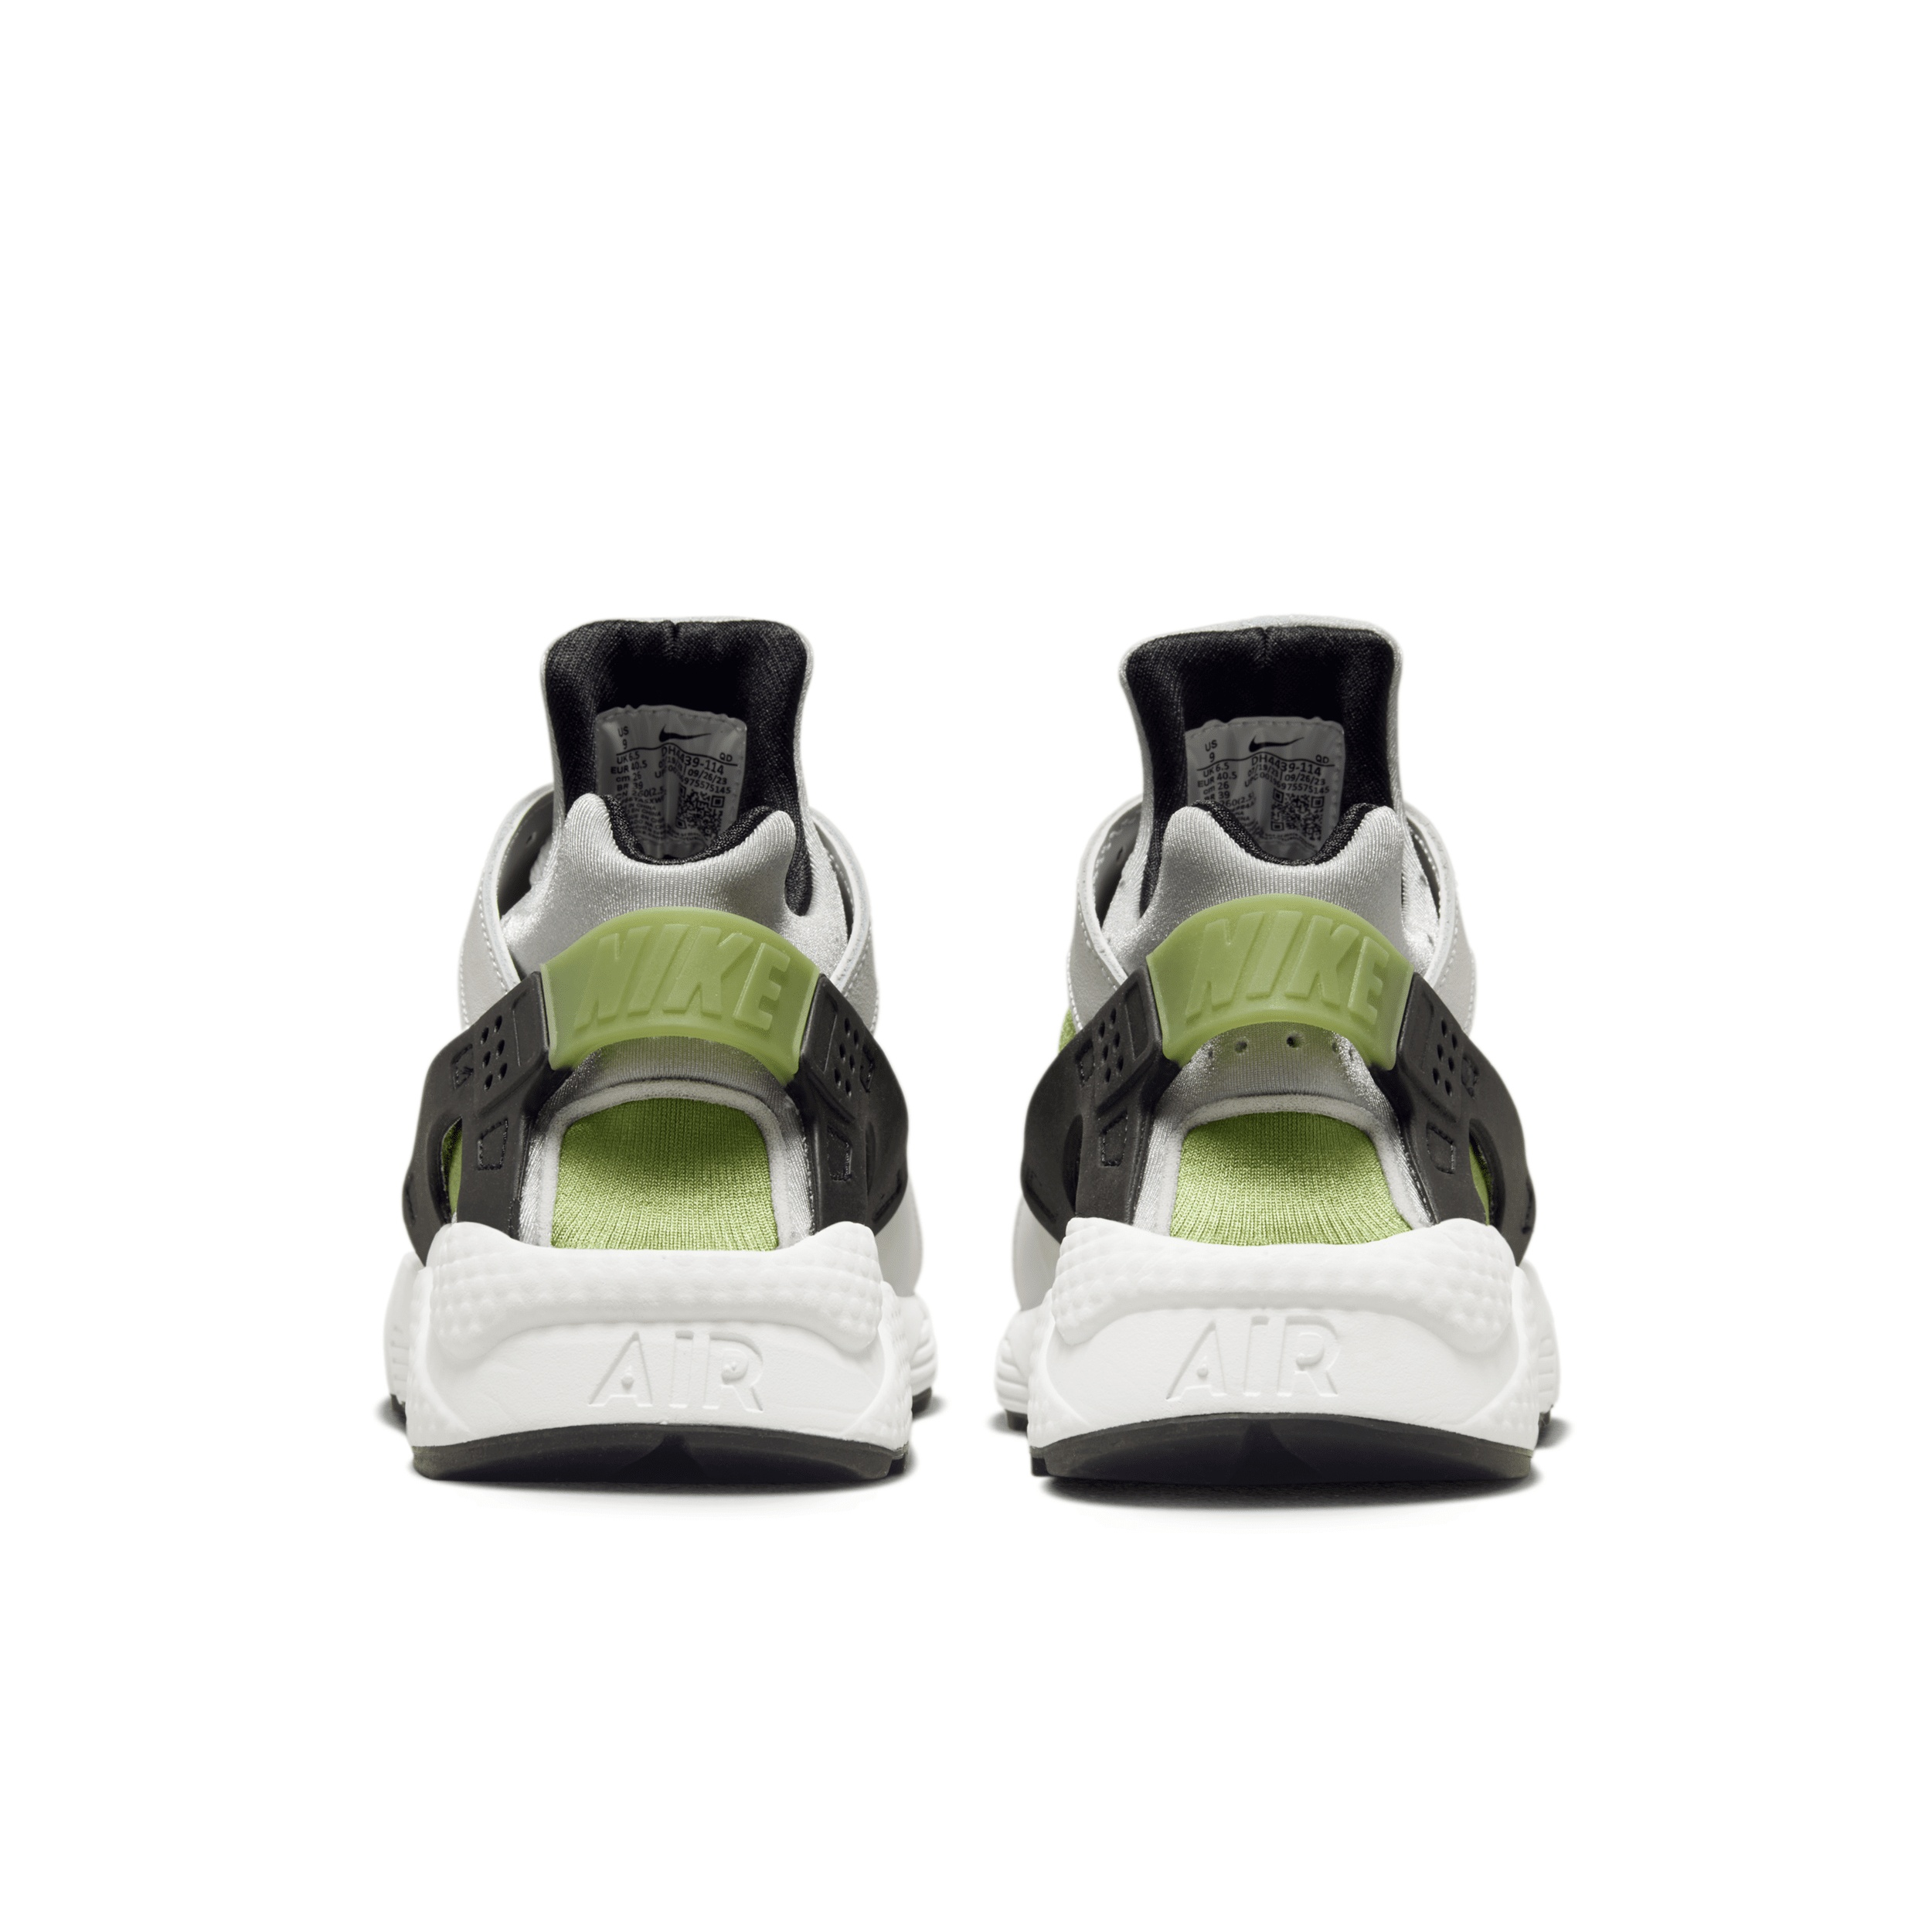 Nike Women's Air Huarache Shoes - 6